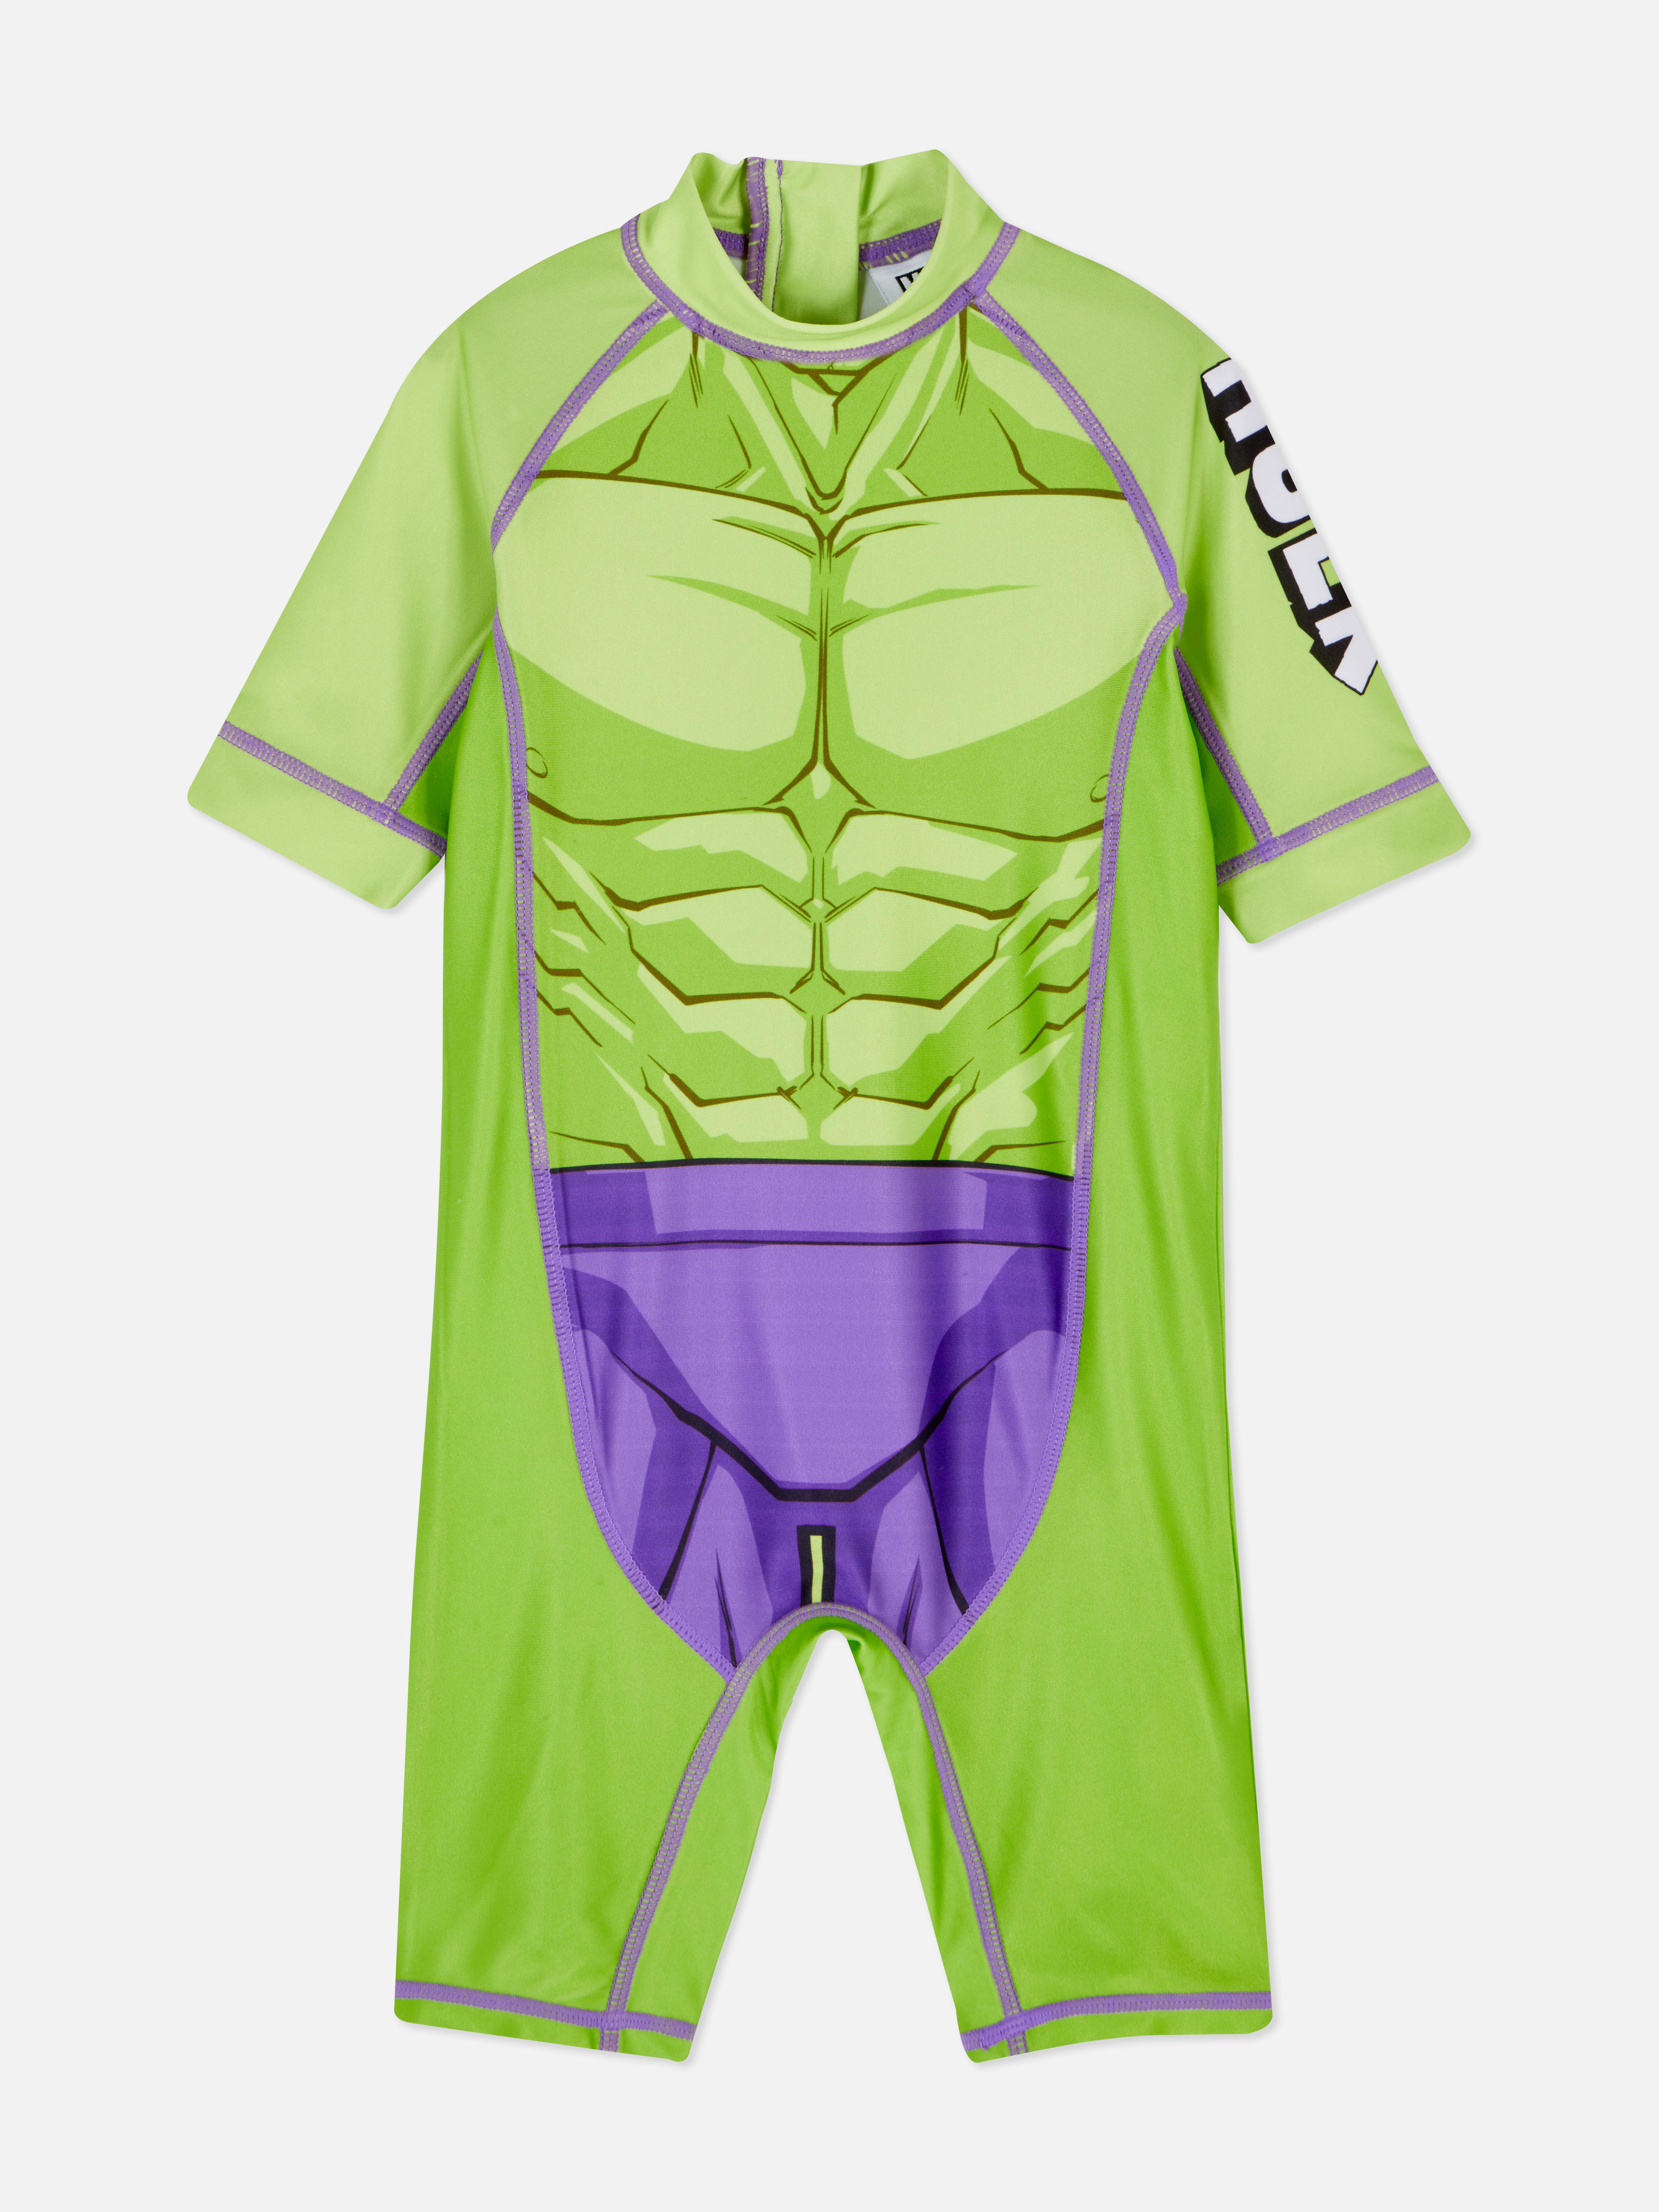 Marvel The Incredible Hulk Half-Zip Wetsuit